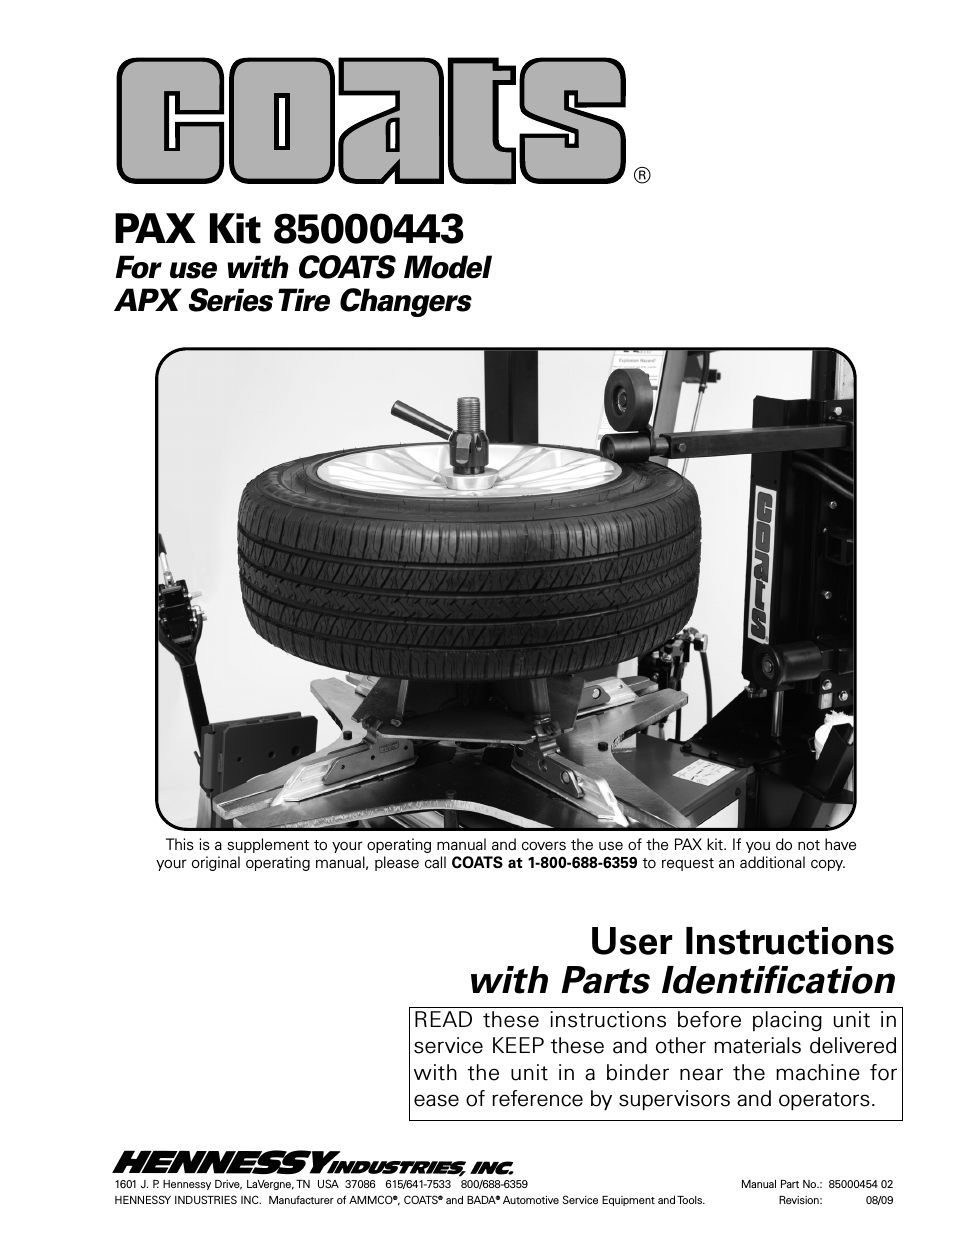 Kit 85000443, PAX Accessory